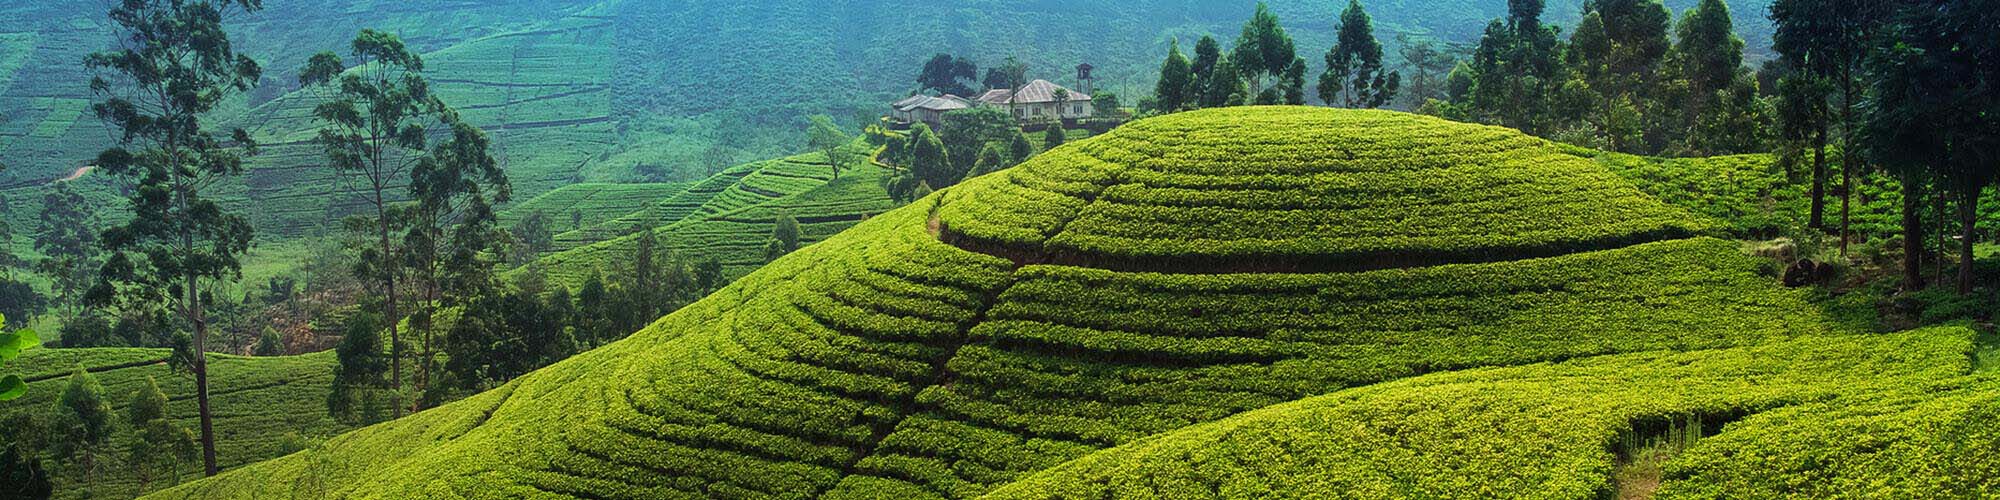 Plantations de thé, Sri Lanka